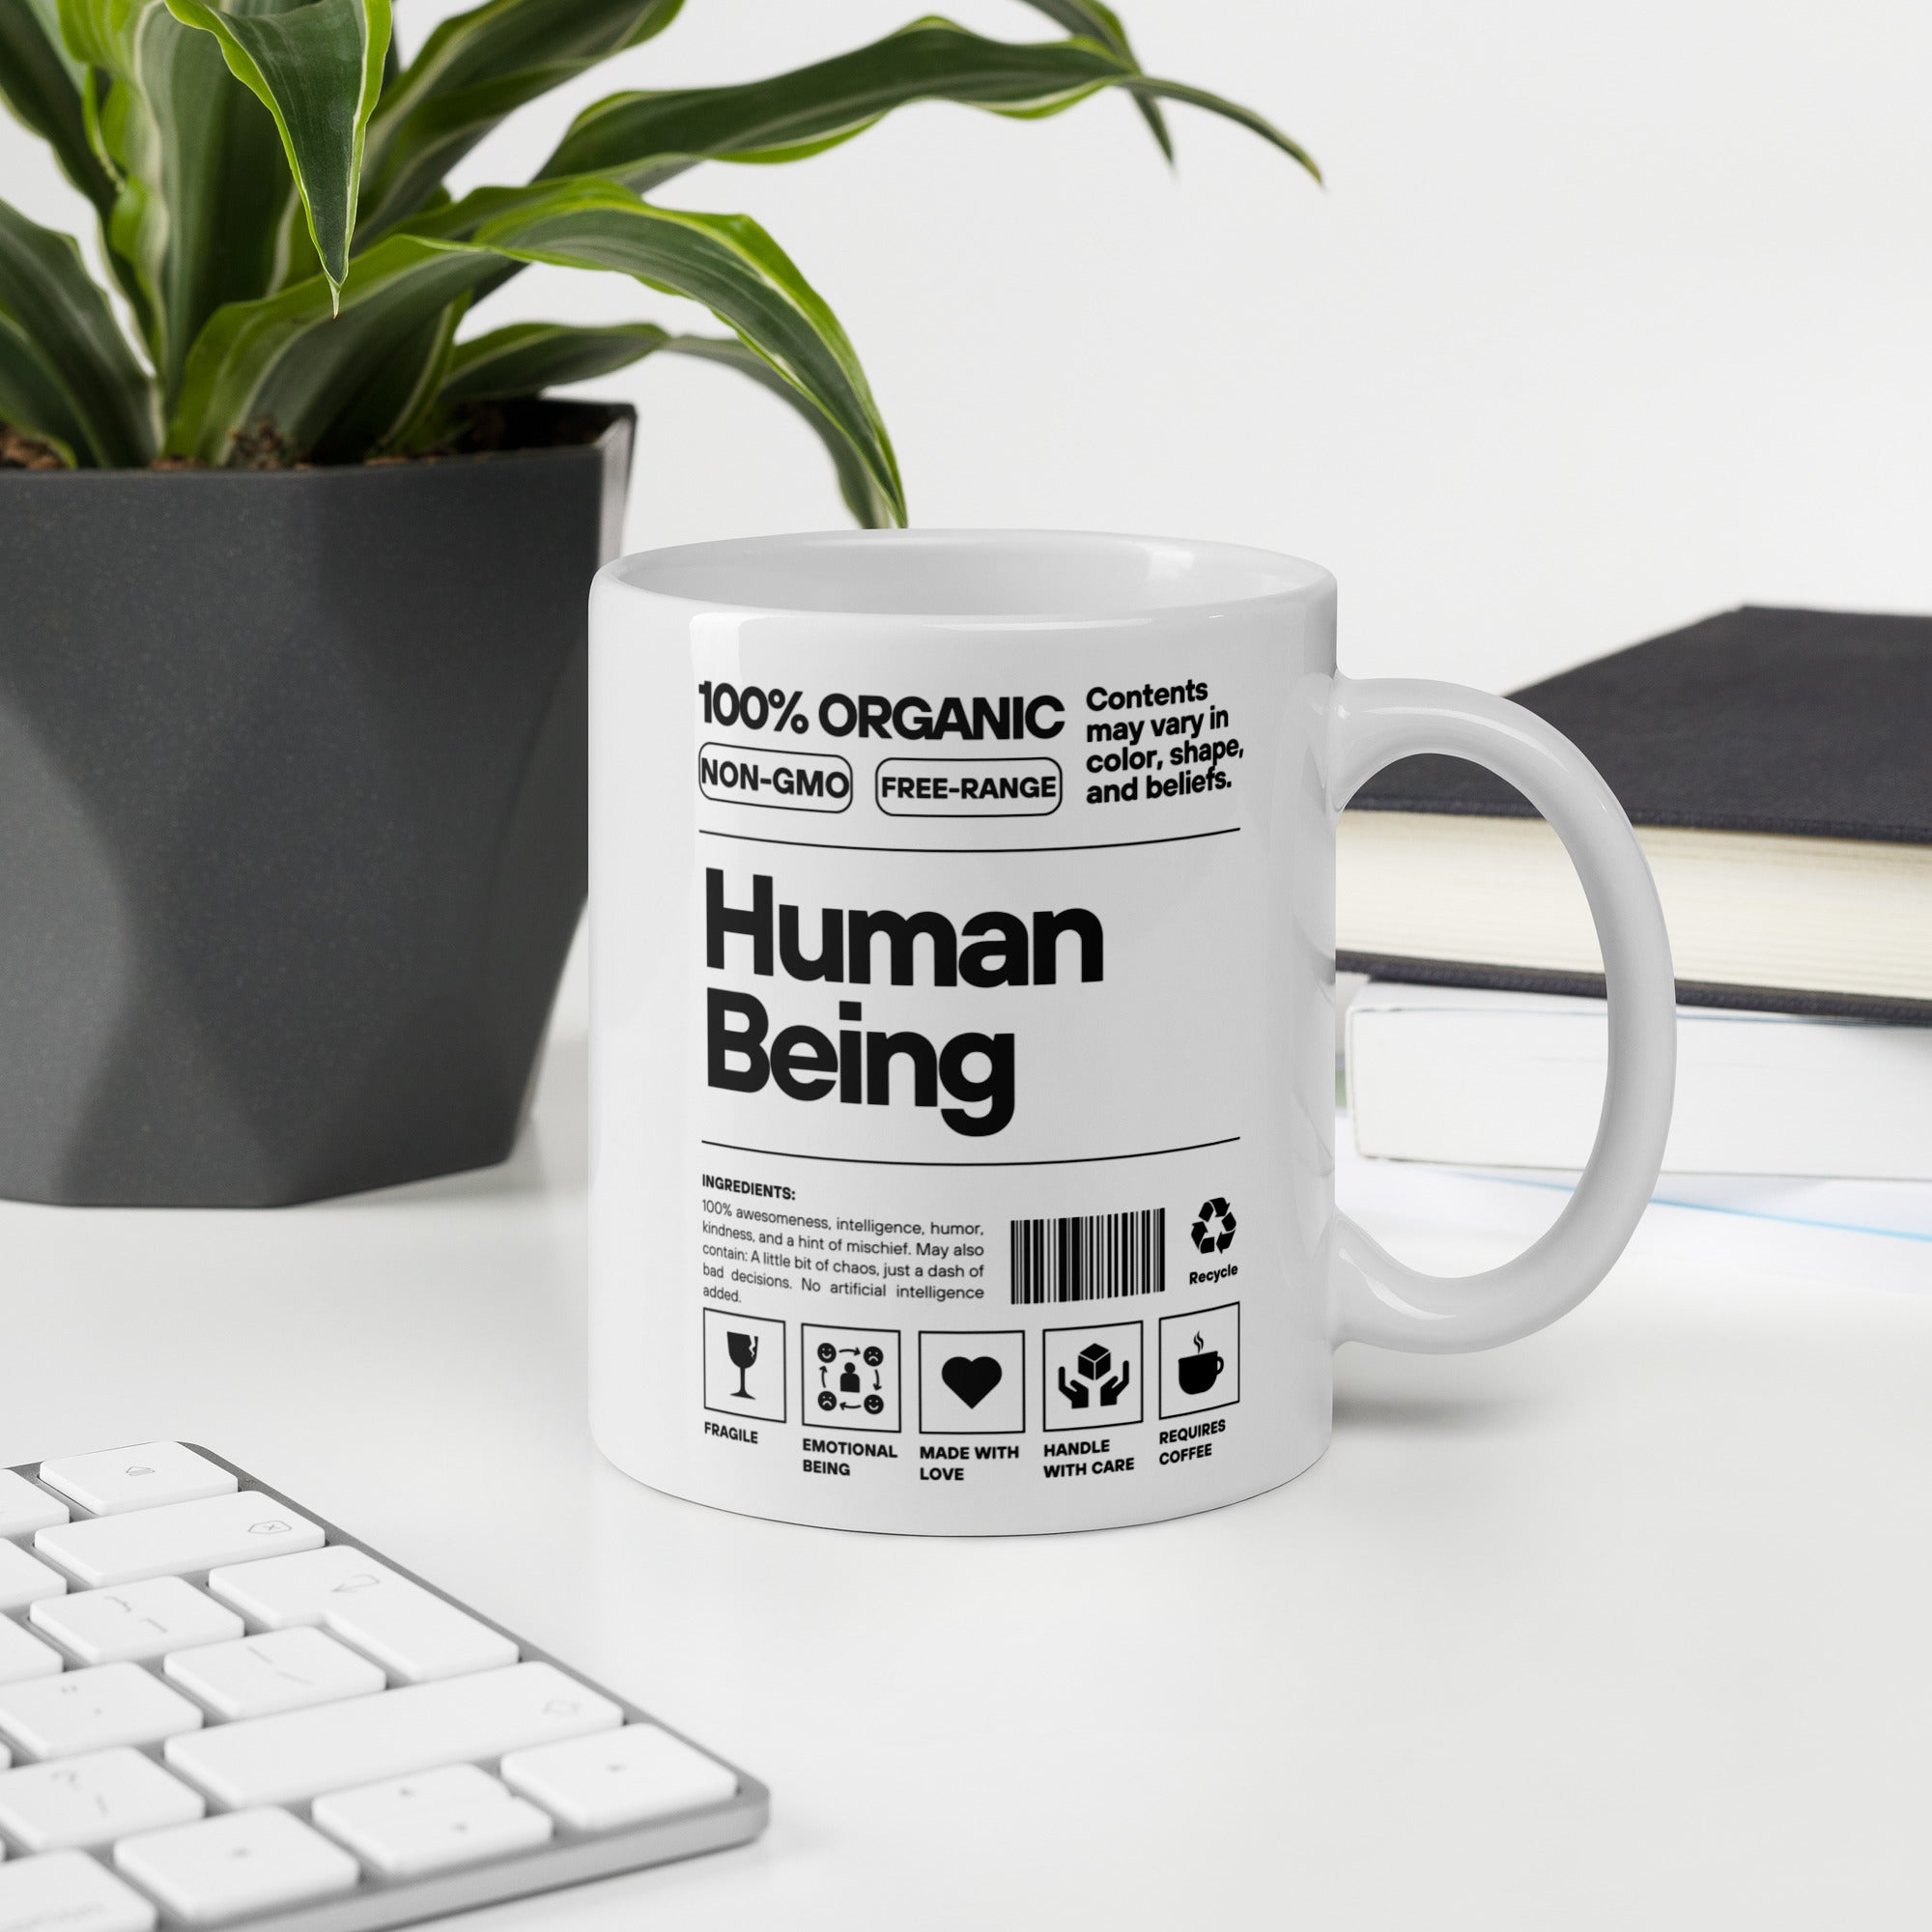 Human Being - White Glossy Mug